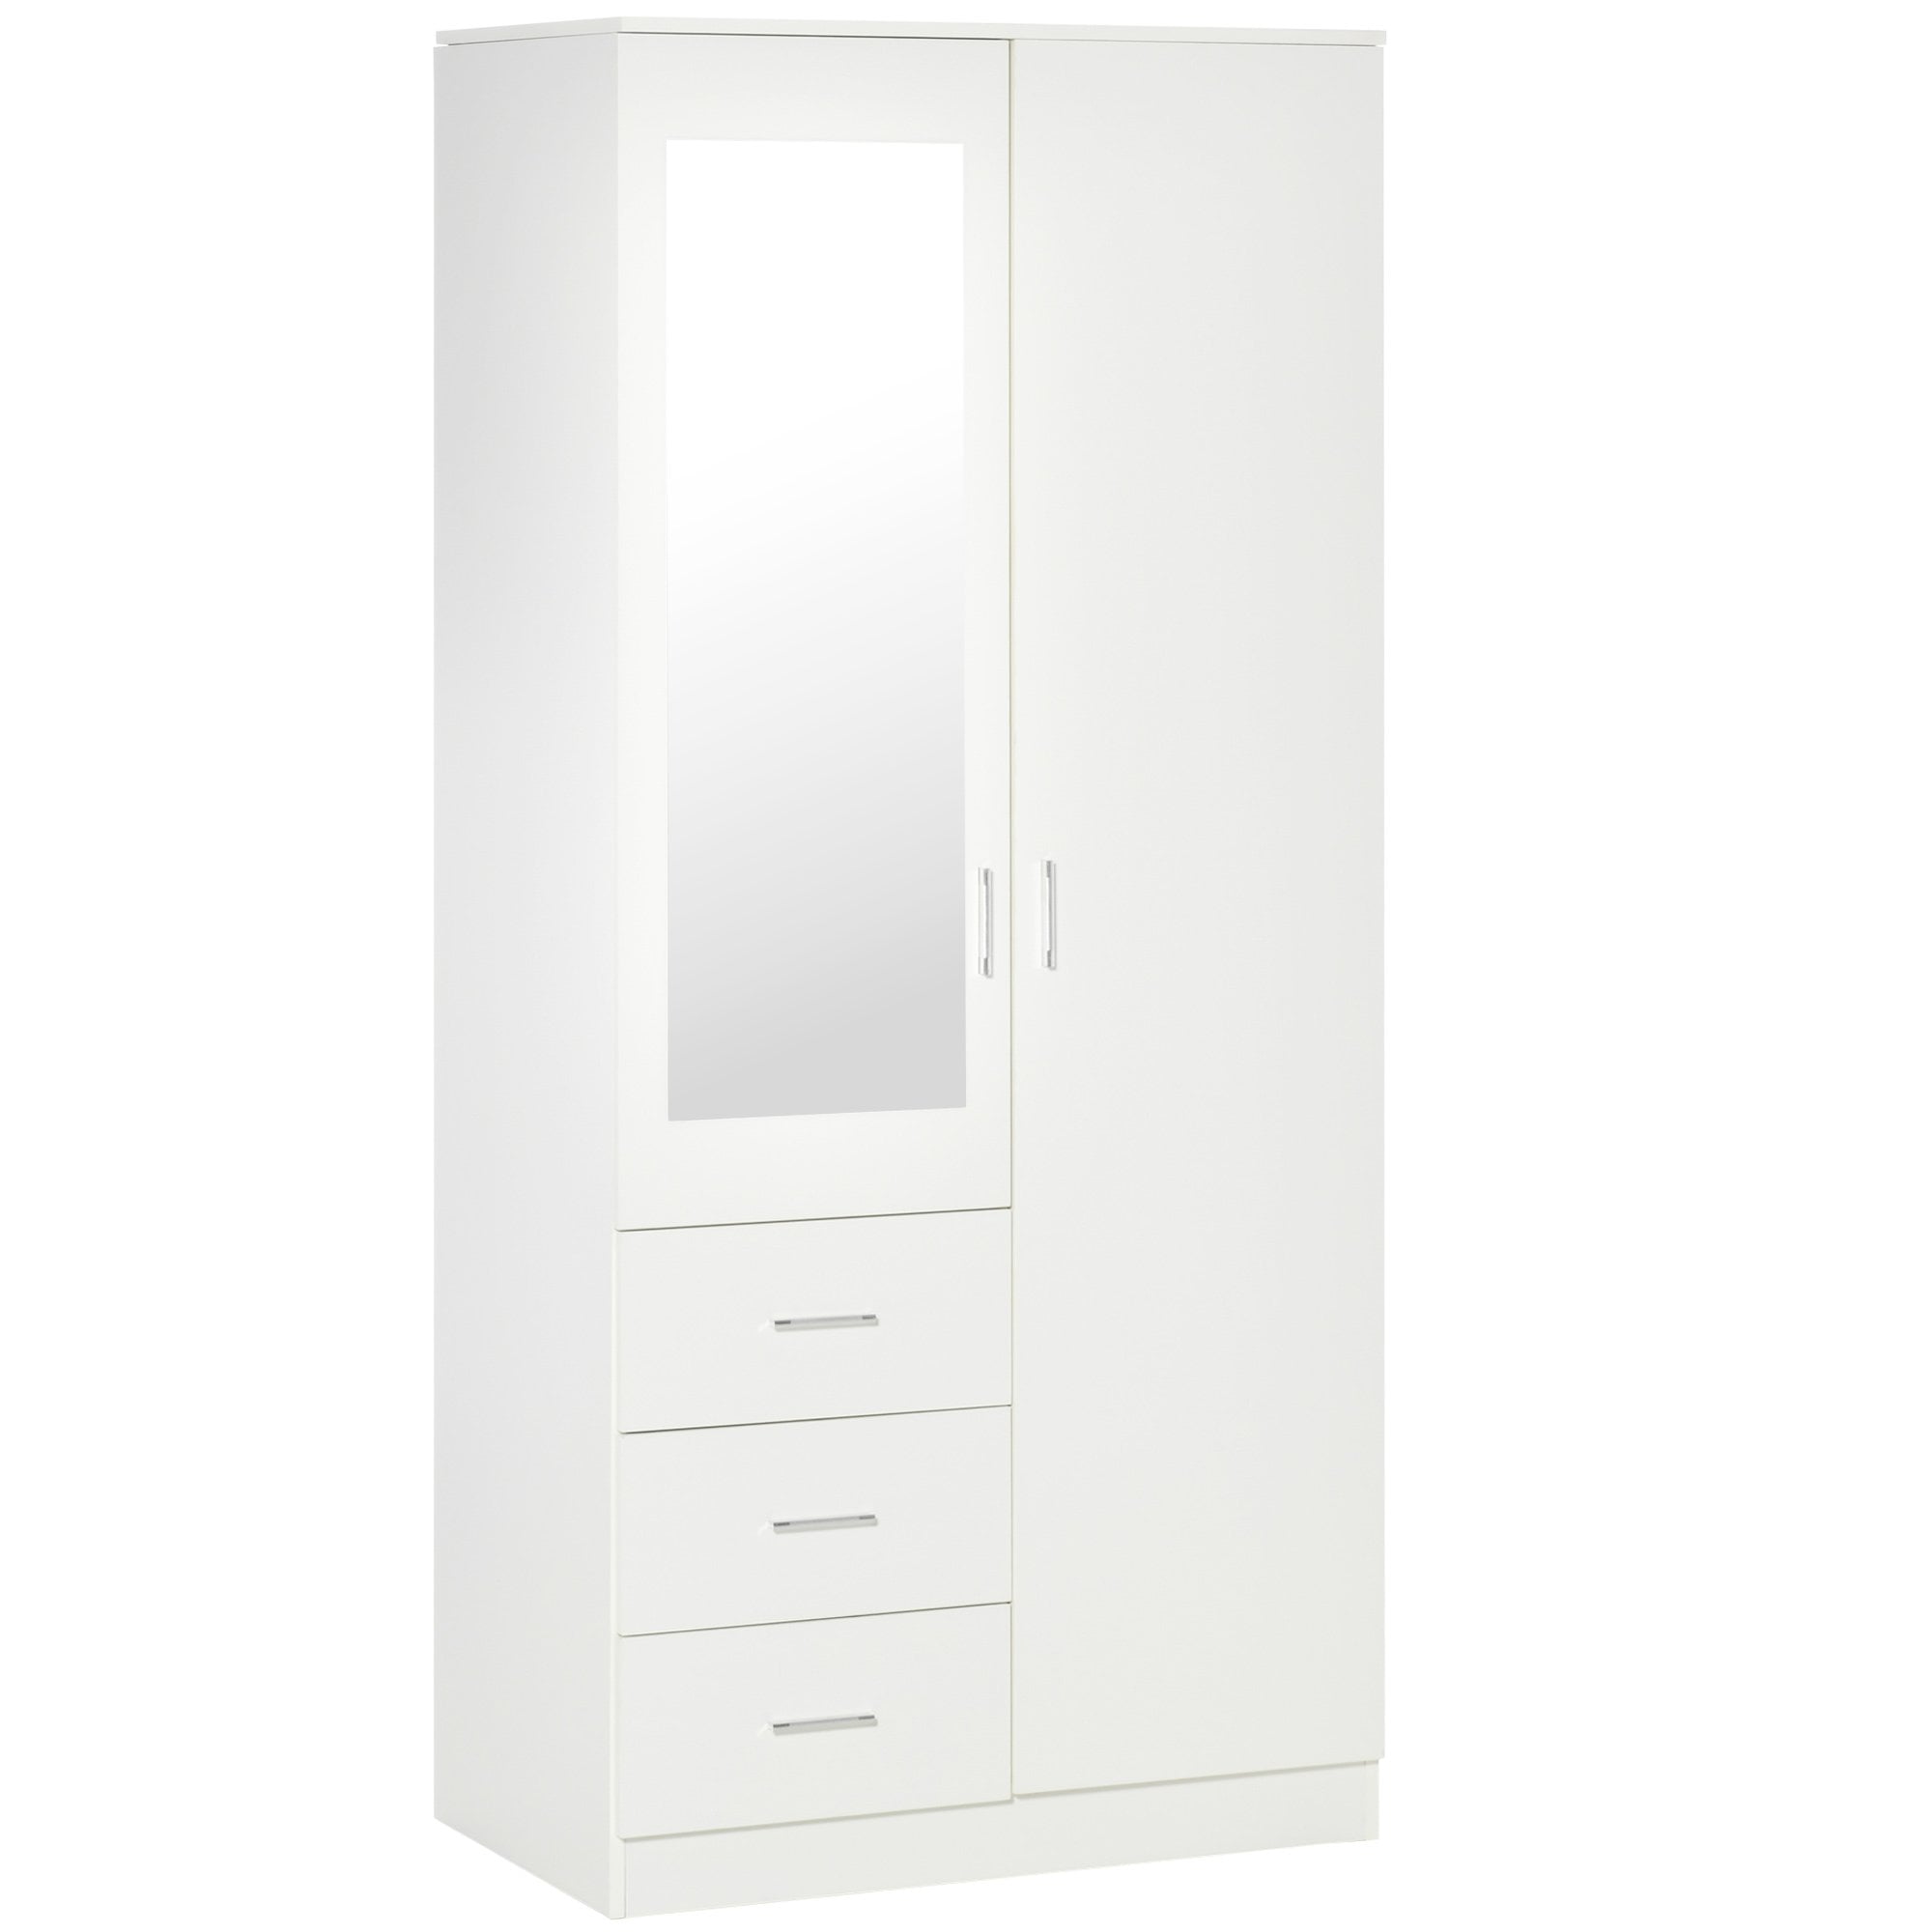 Modern Mirror Wardrobe 2 Door Storage Cupboards Home Storage Organisation Furniture with Adjustable Shelf - Hanging Rail and 3 Drawers - 180cm - White